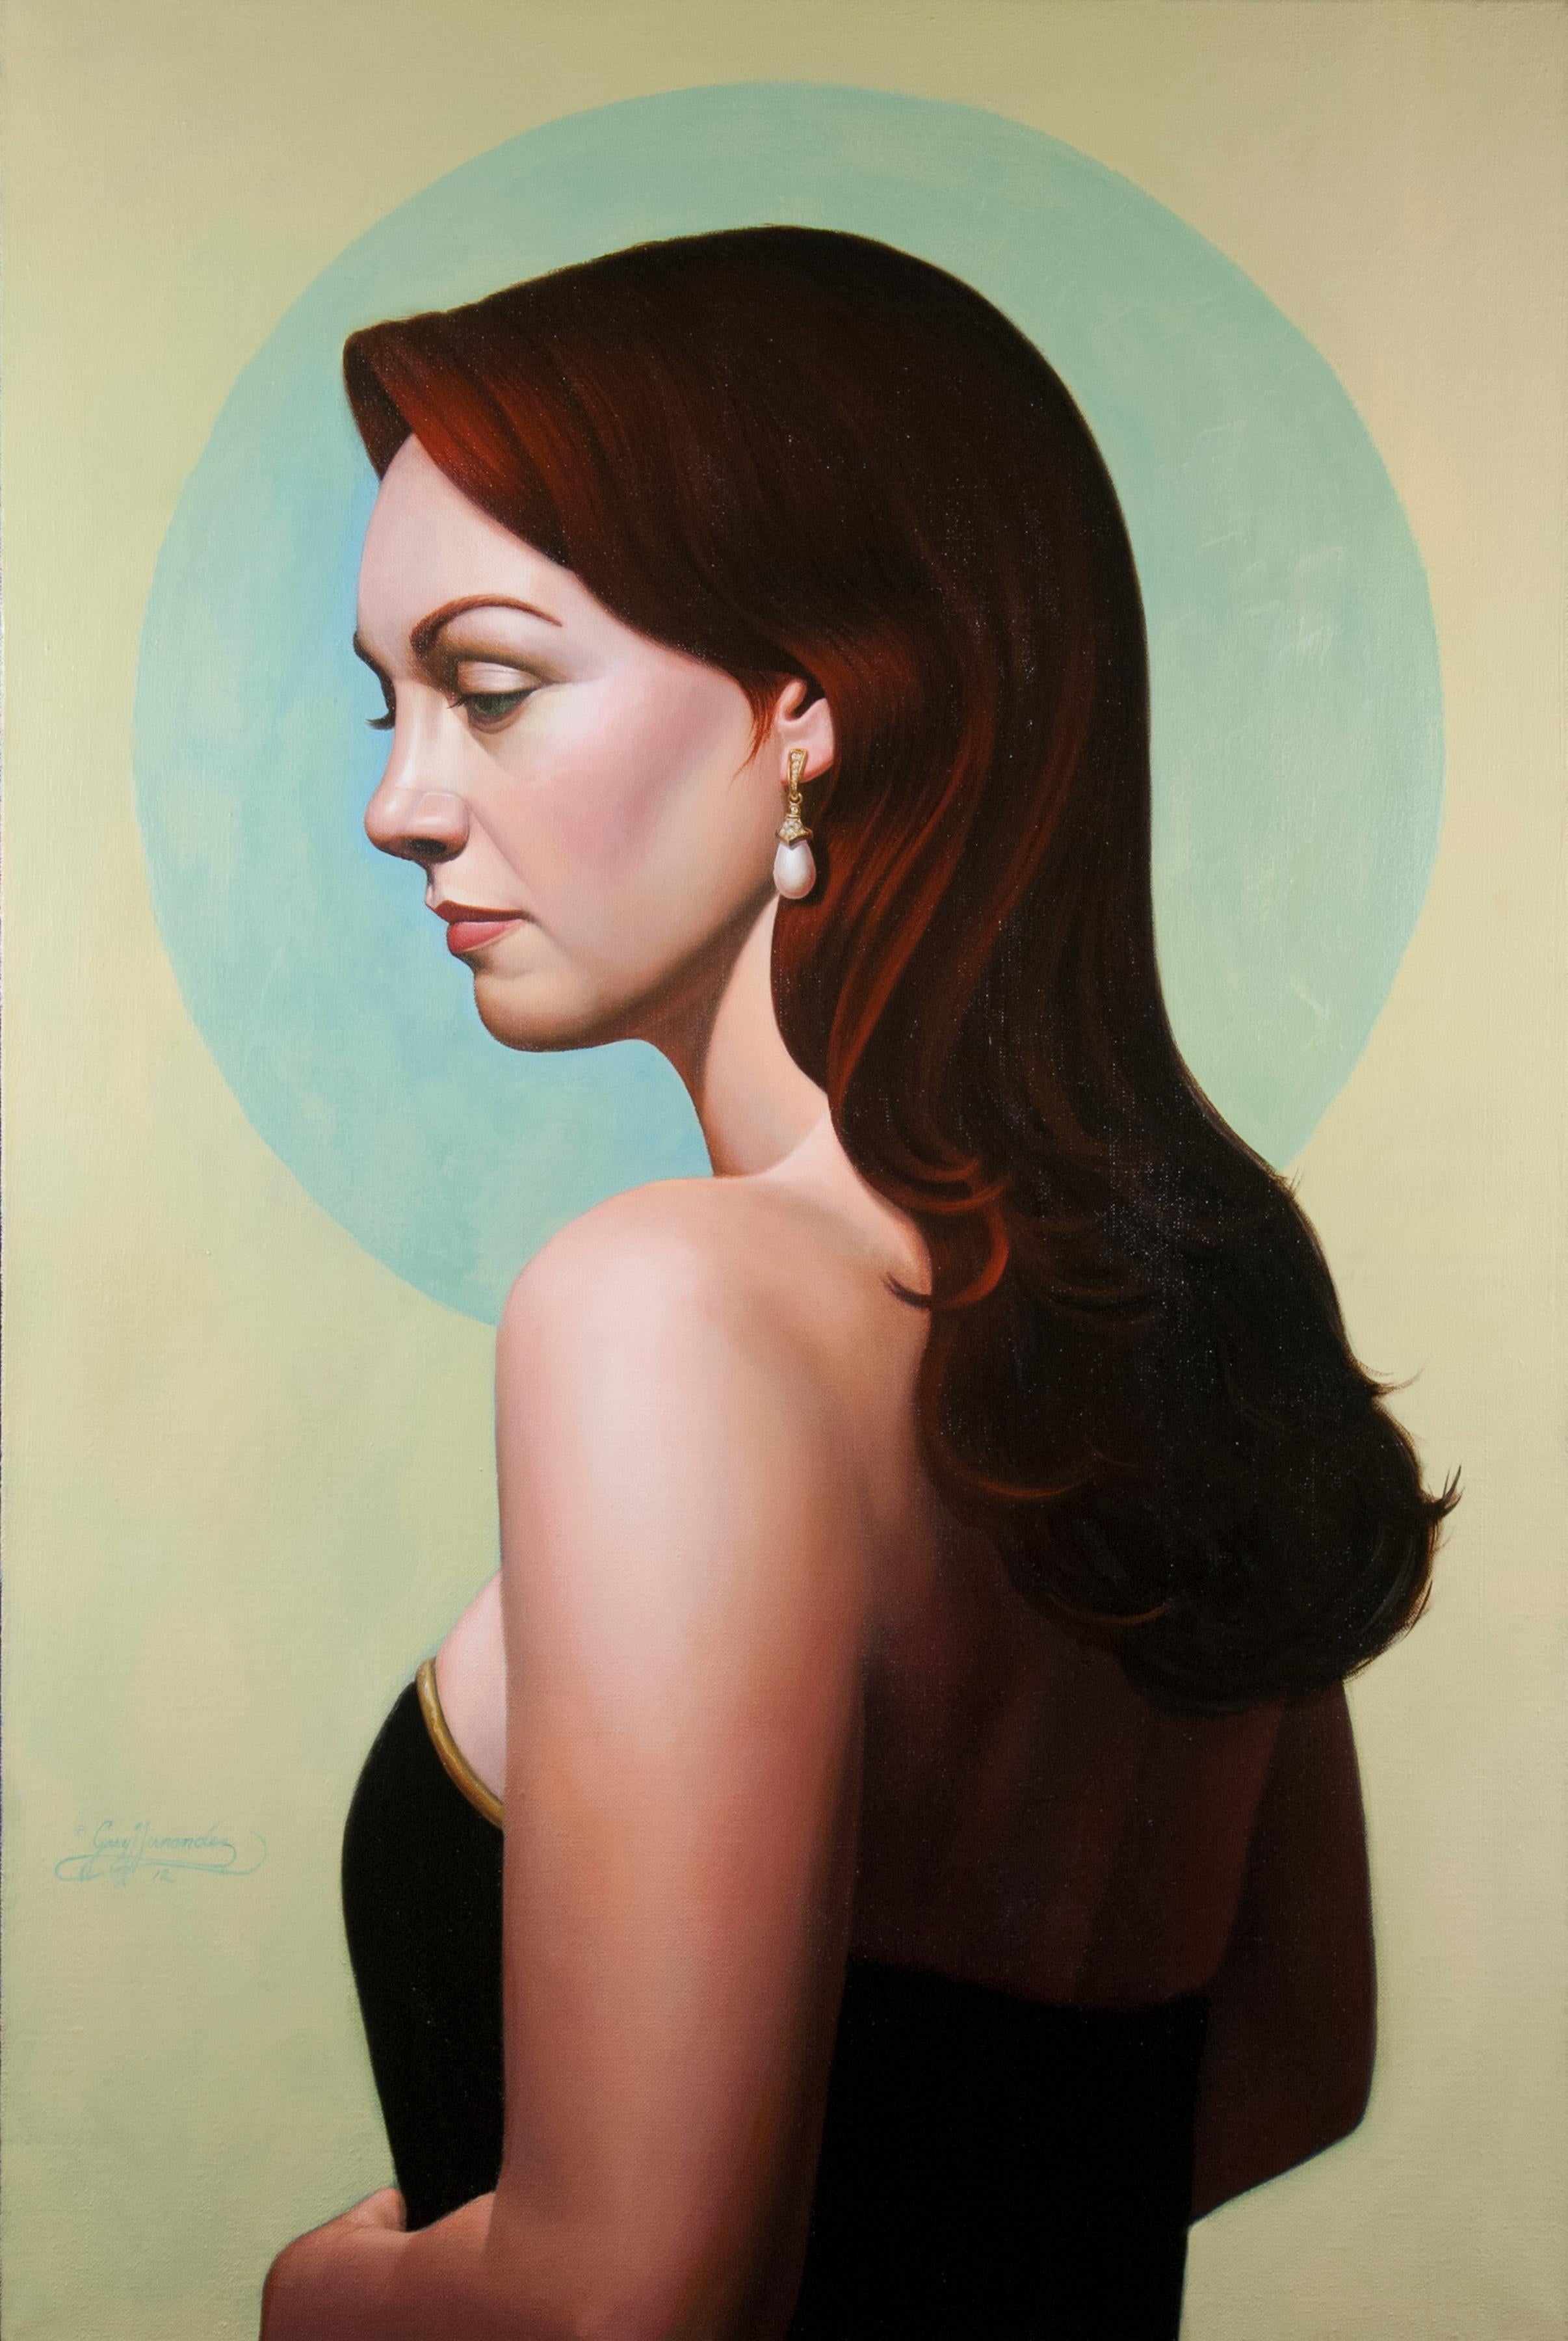 Blue Moon, American Realist painter, Representational Figurative art, Portrait